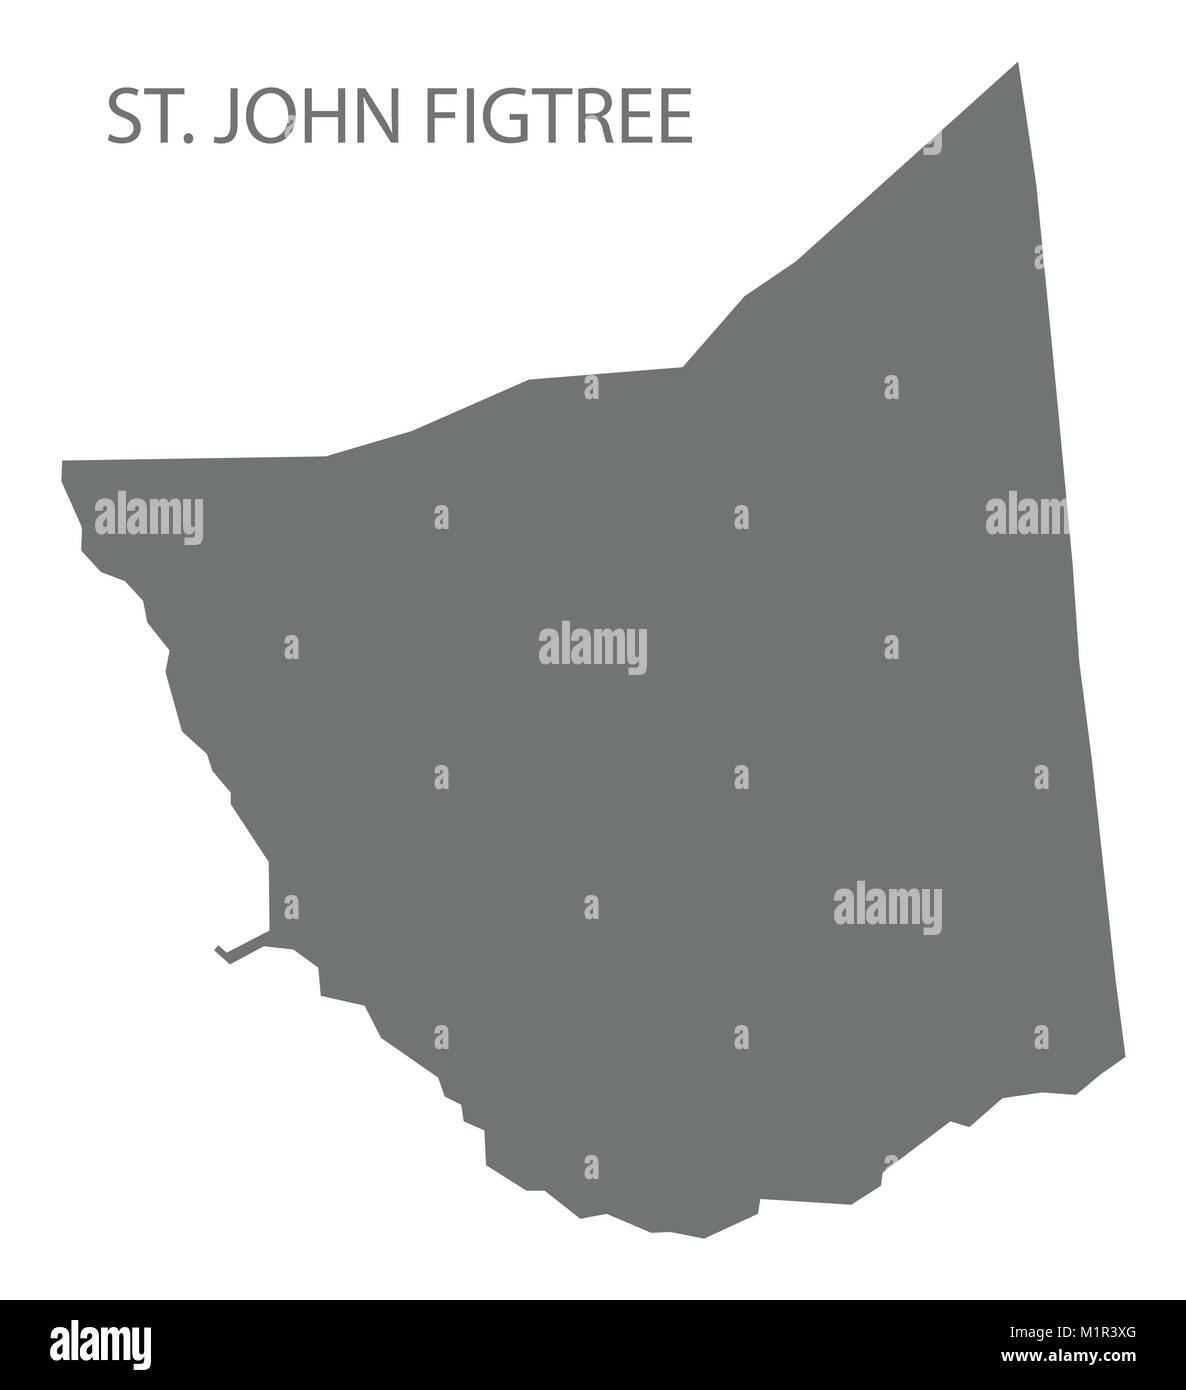 St. John figtree Karte grau Abbildung silhouette Form Stock Vektor